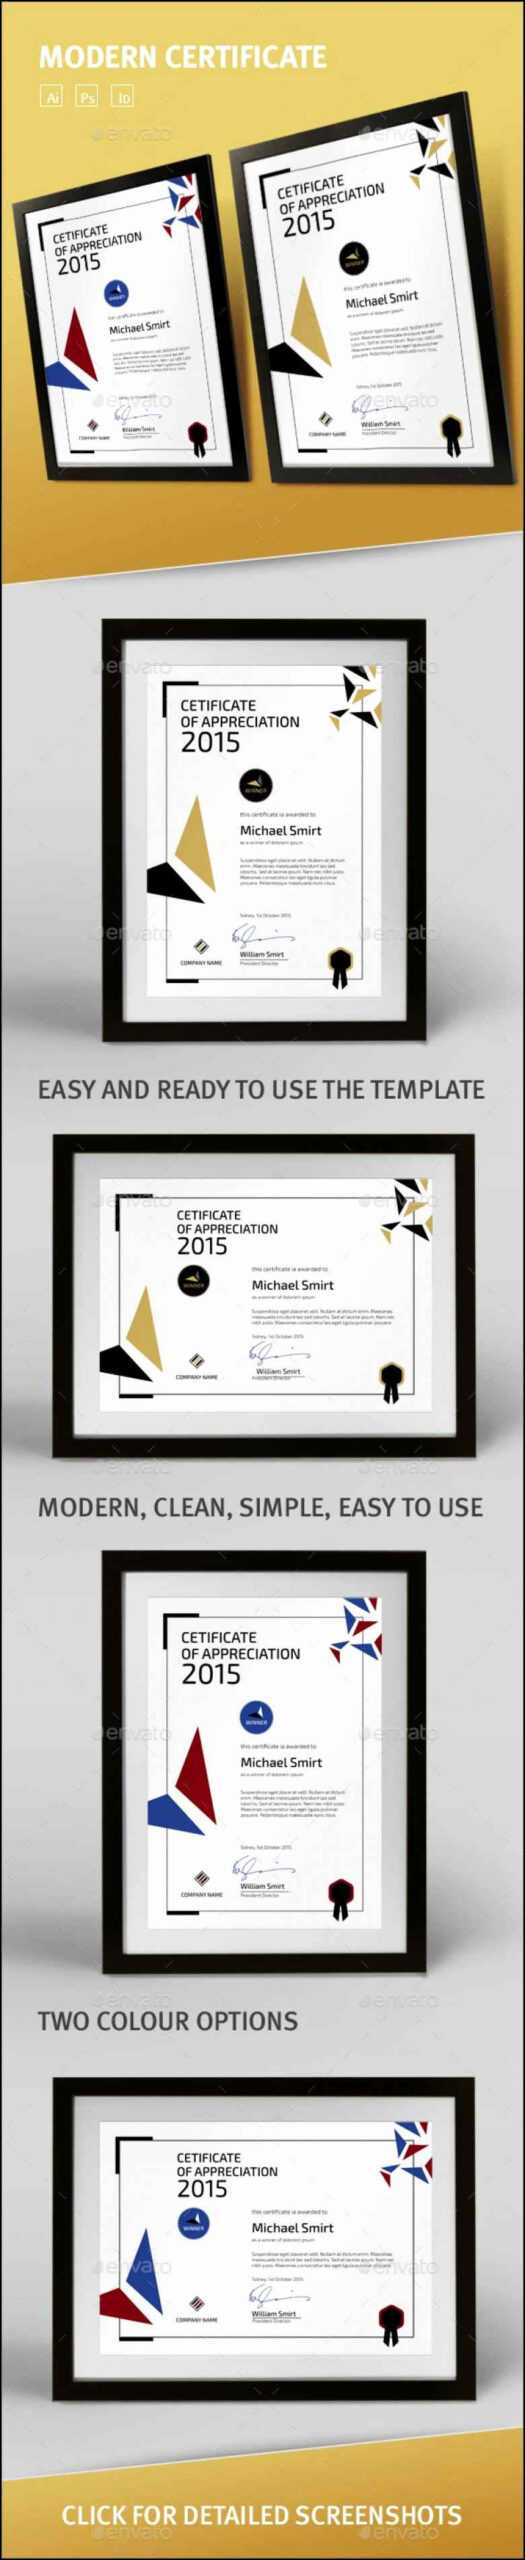 30 Fresh Gartner Certificate Templates Graphics Within Gartner Certificate Templates